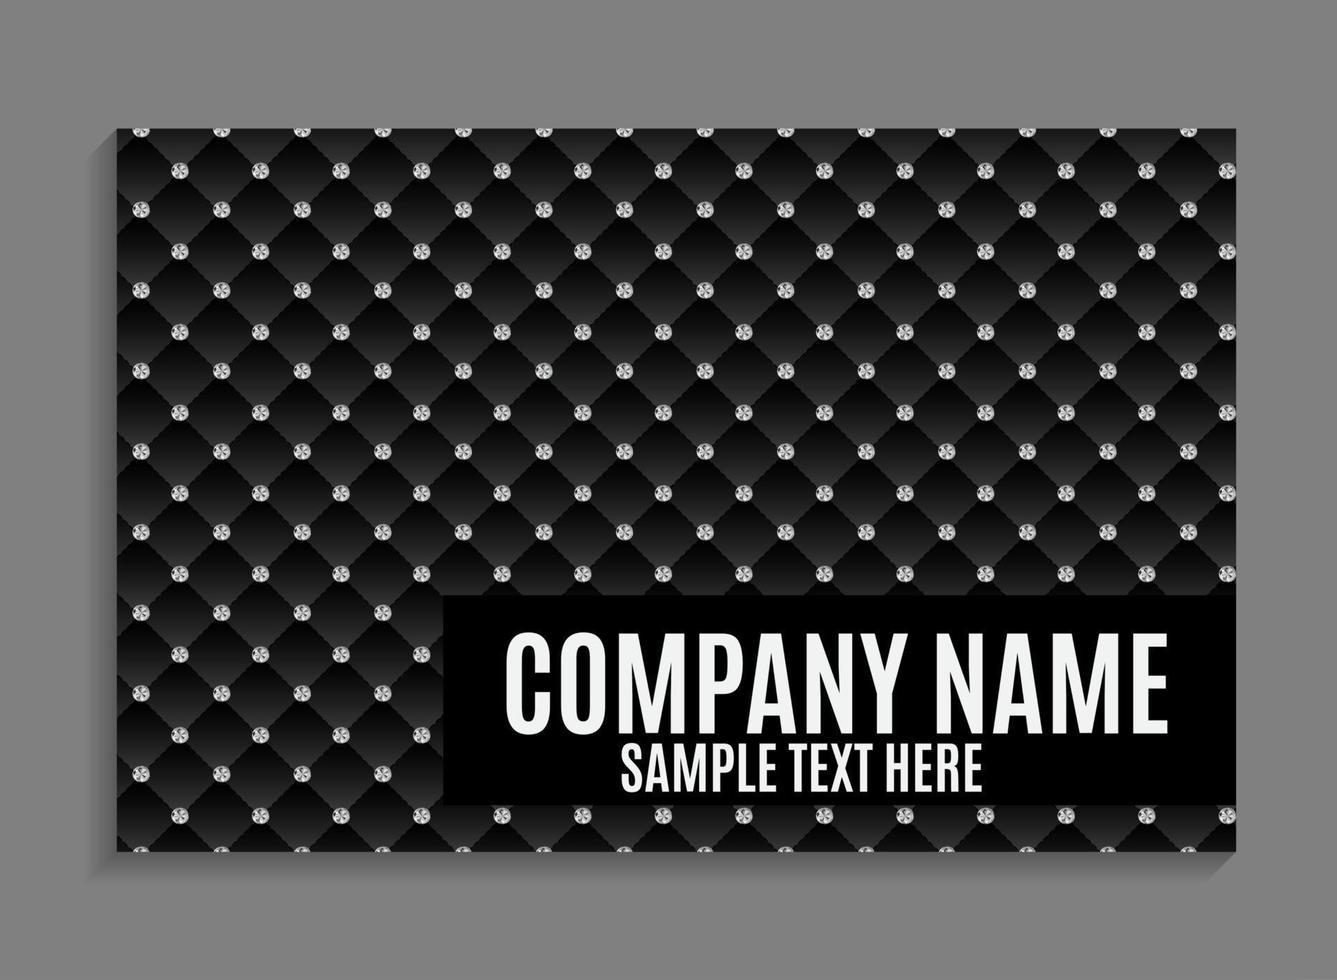 Luxury Diamond Company Business Card Template. Vector Illustration